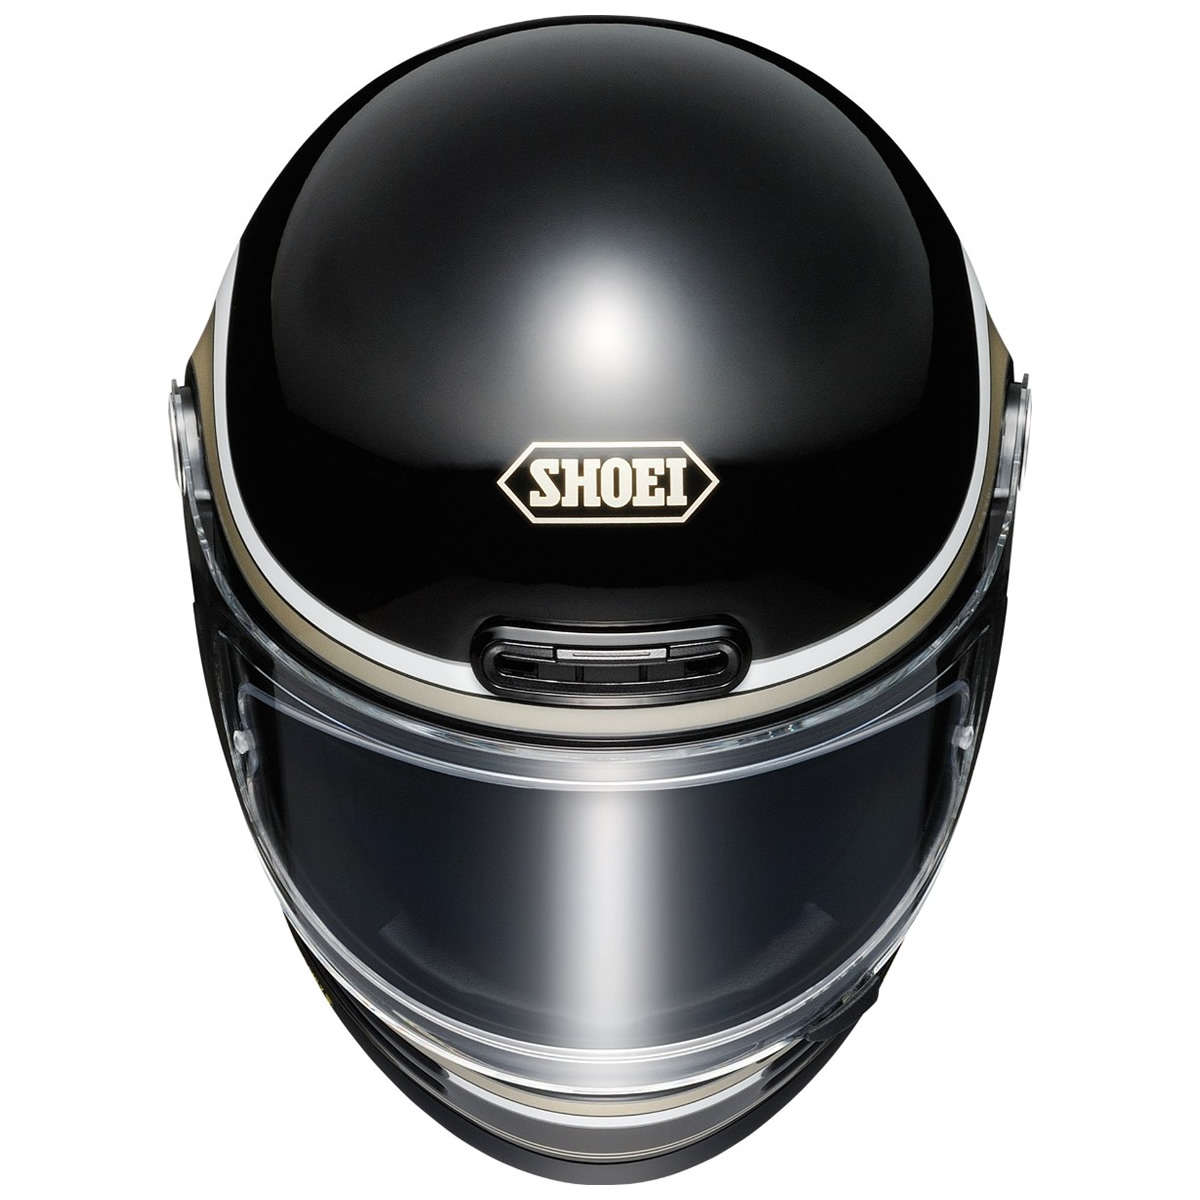 Shoei Helm Glamster 06 Bivouac, schwarz-weiß-gold